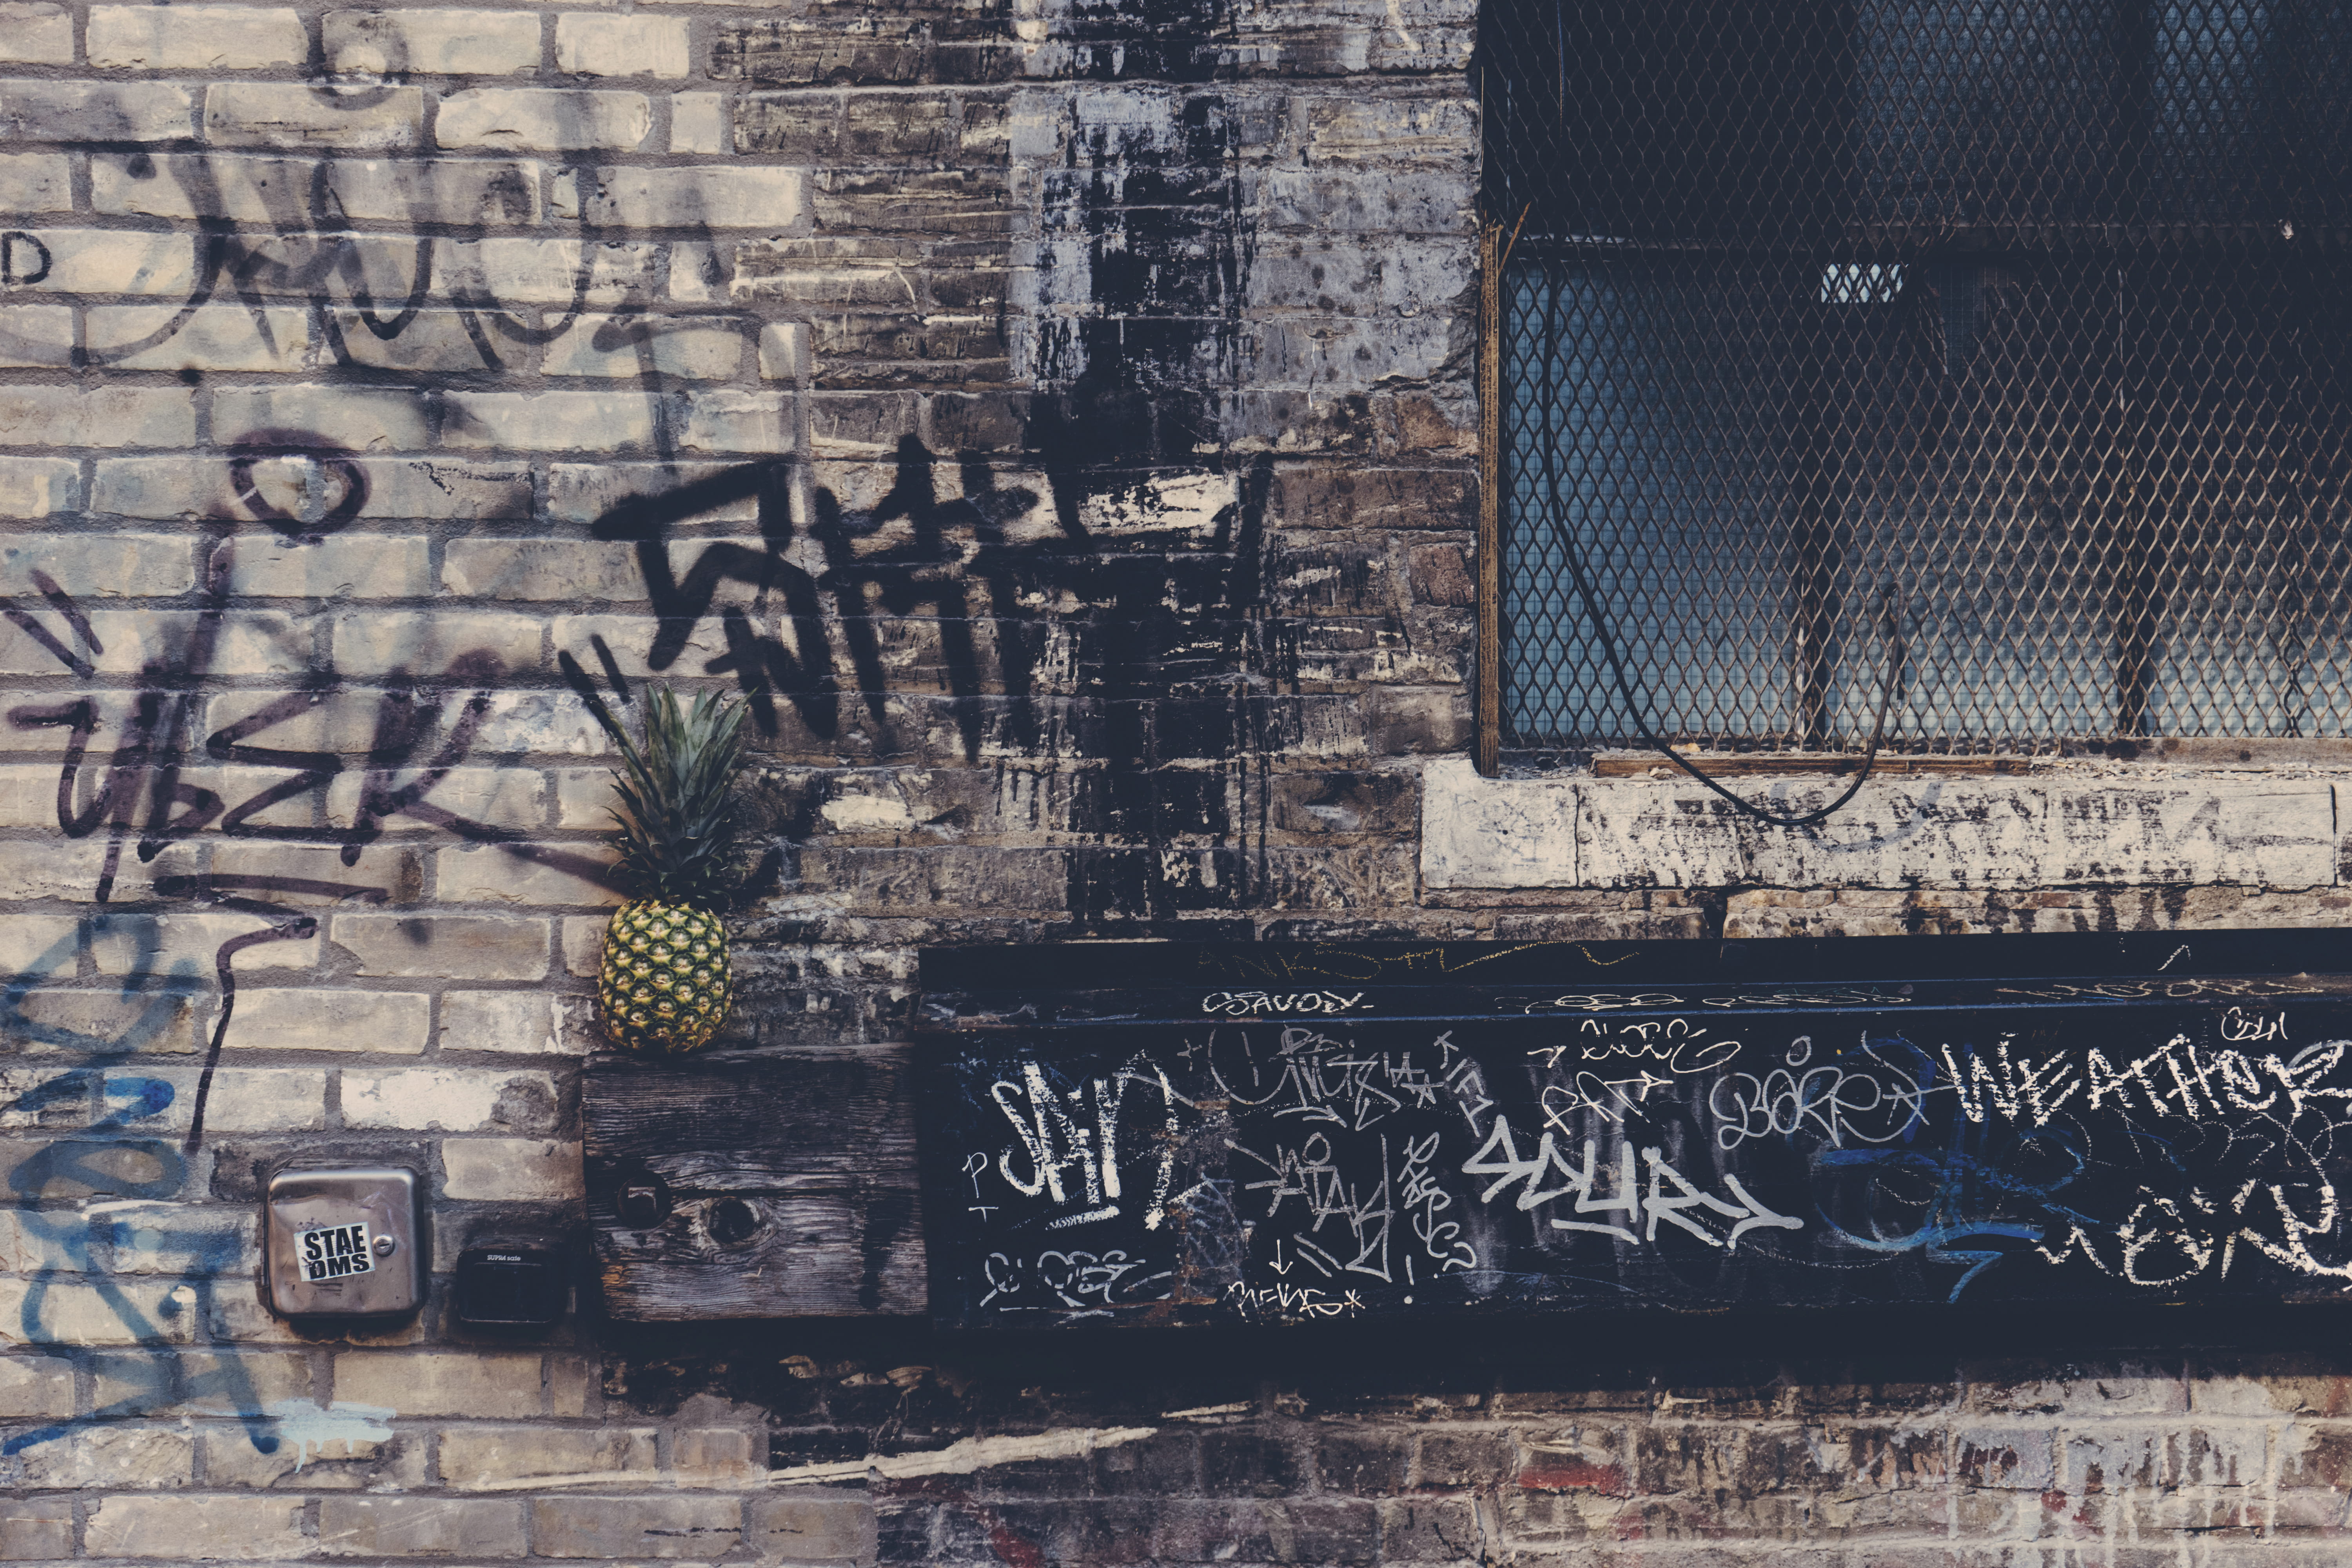 city, graffiti, dirty, building, alley, bricks, design, fruit